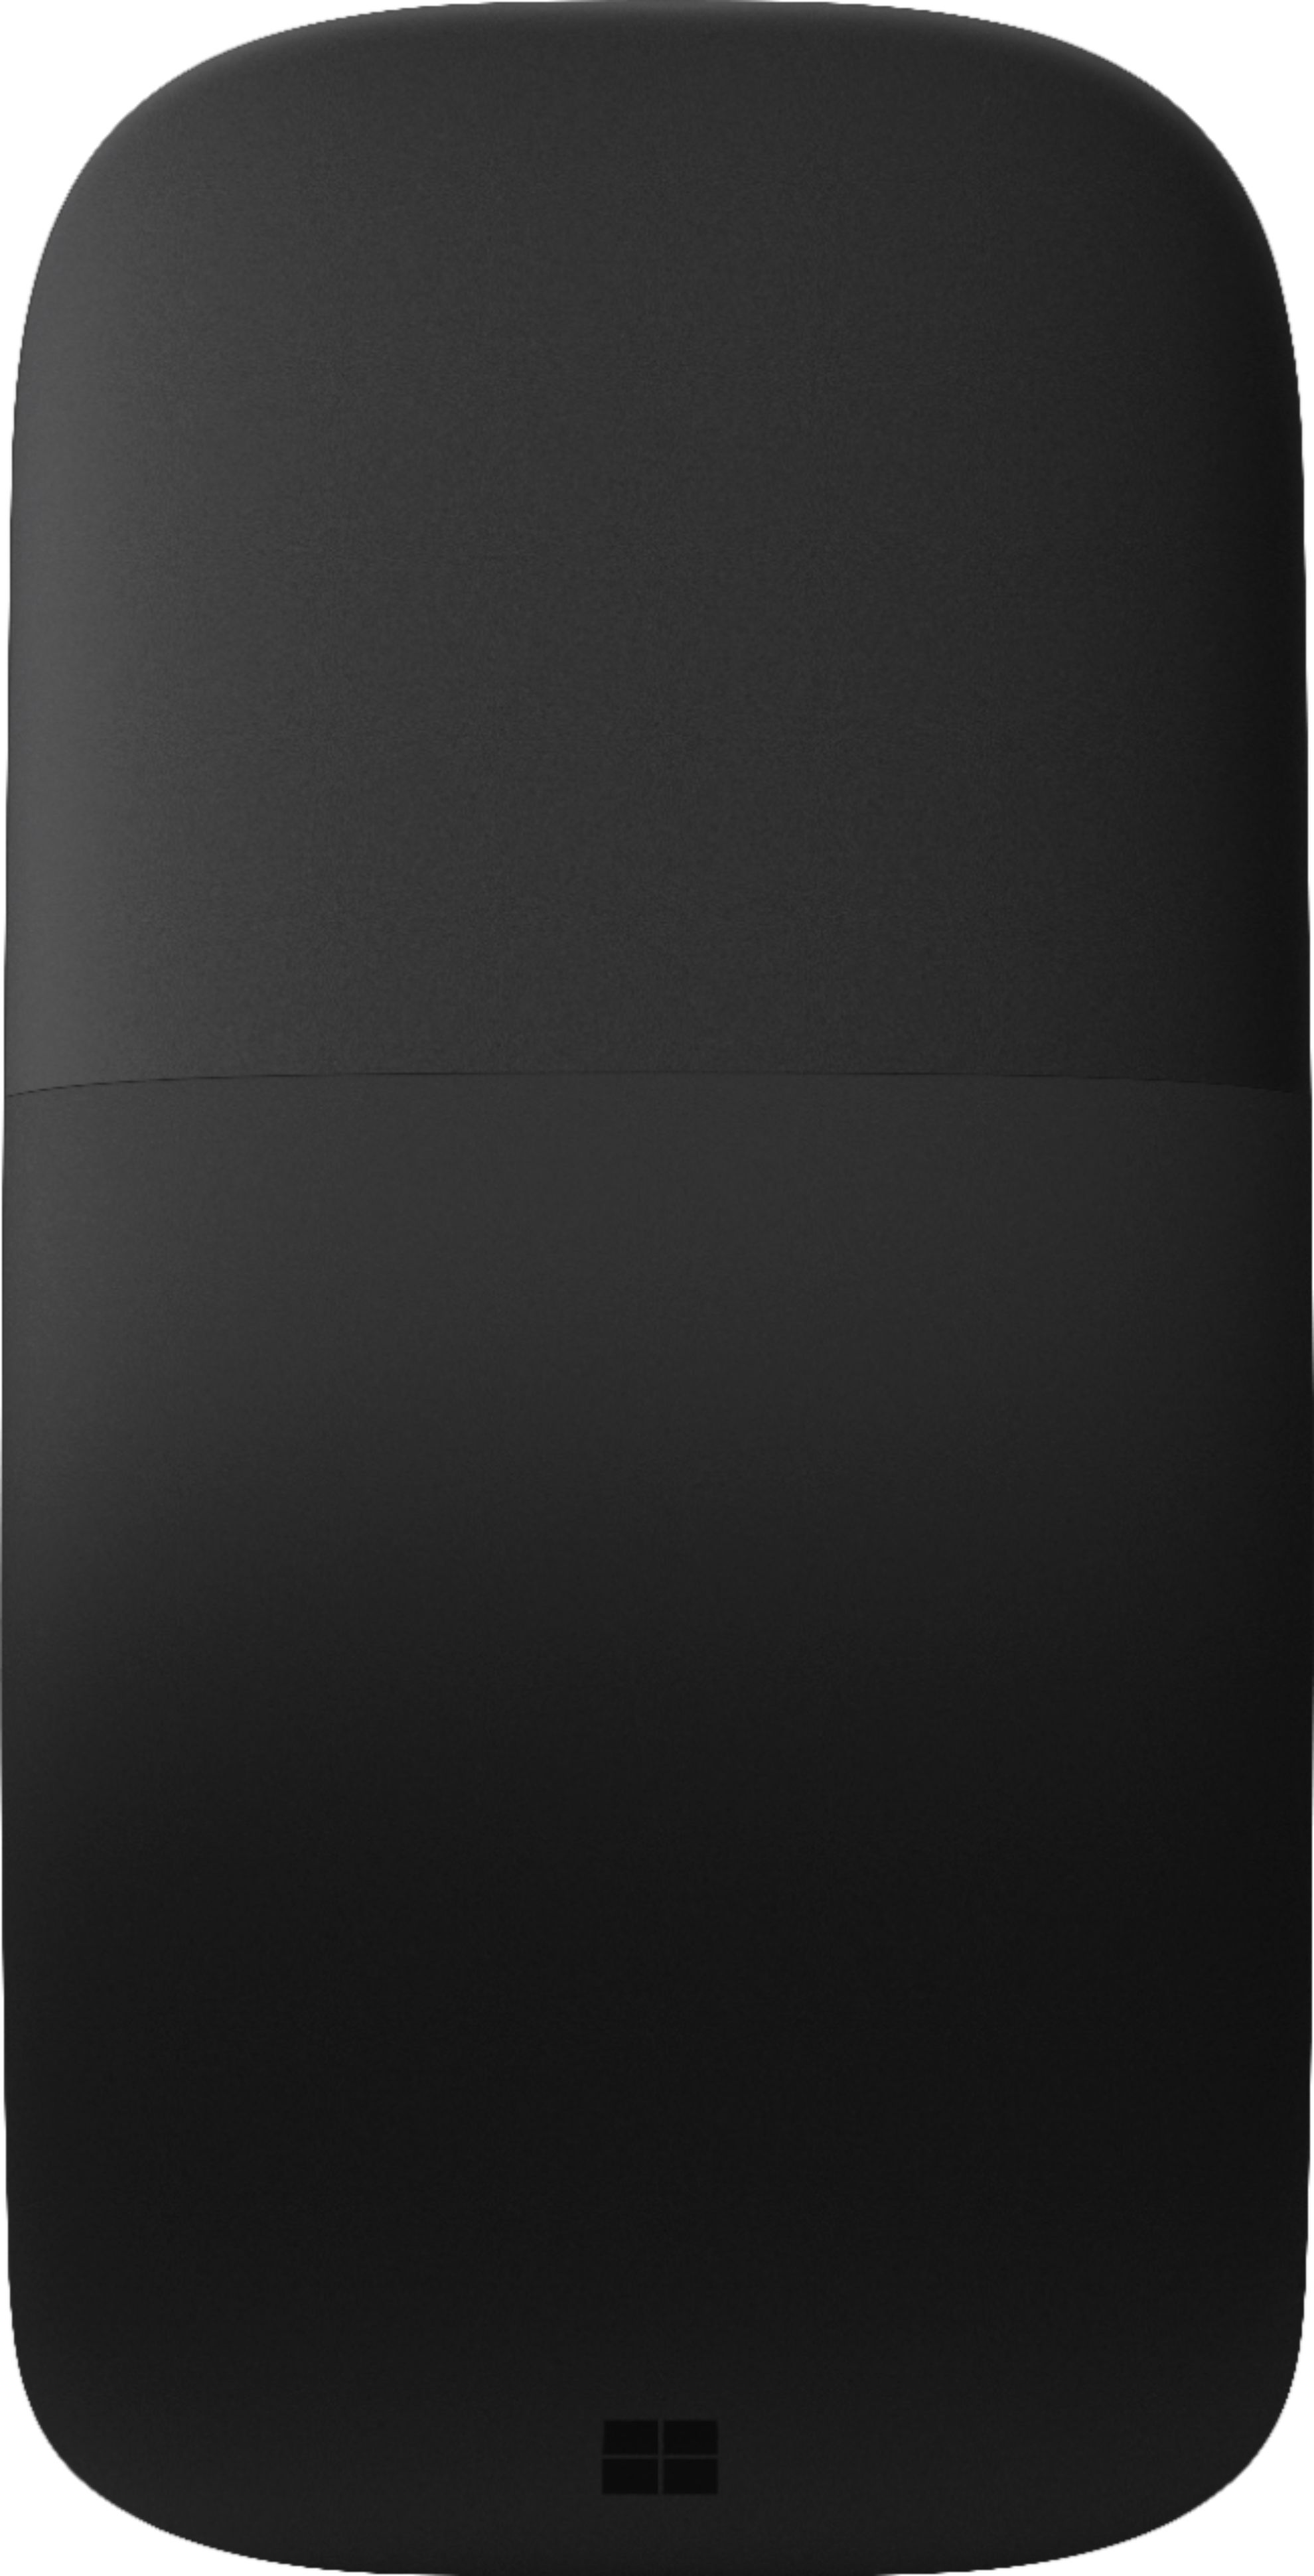 Mouse CZV-00097/ELG-00001 Black Arc Surface Best BlueTrack - Ambidextrous Microsoft Wireless Buy